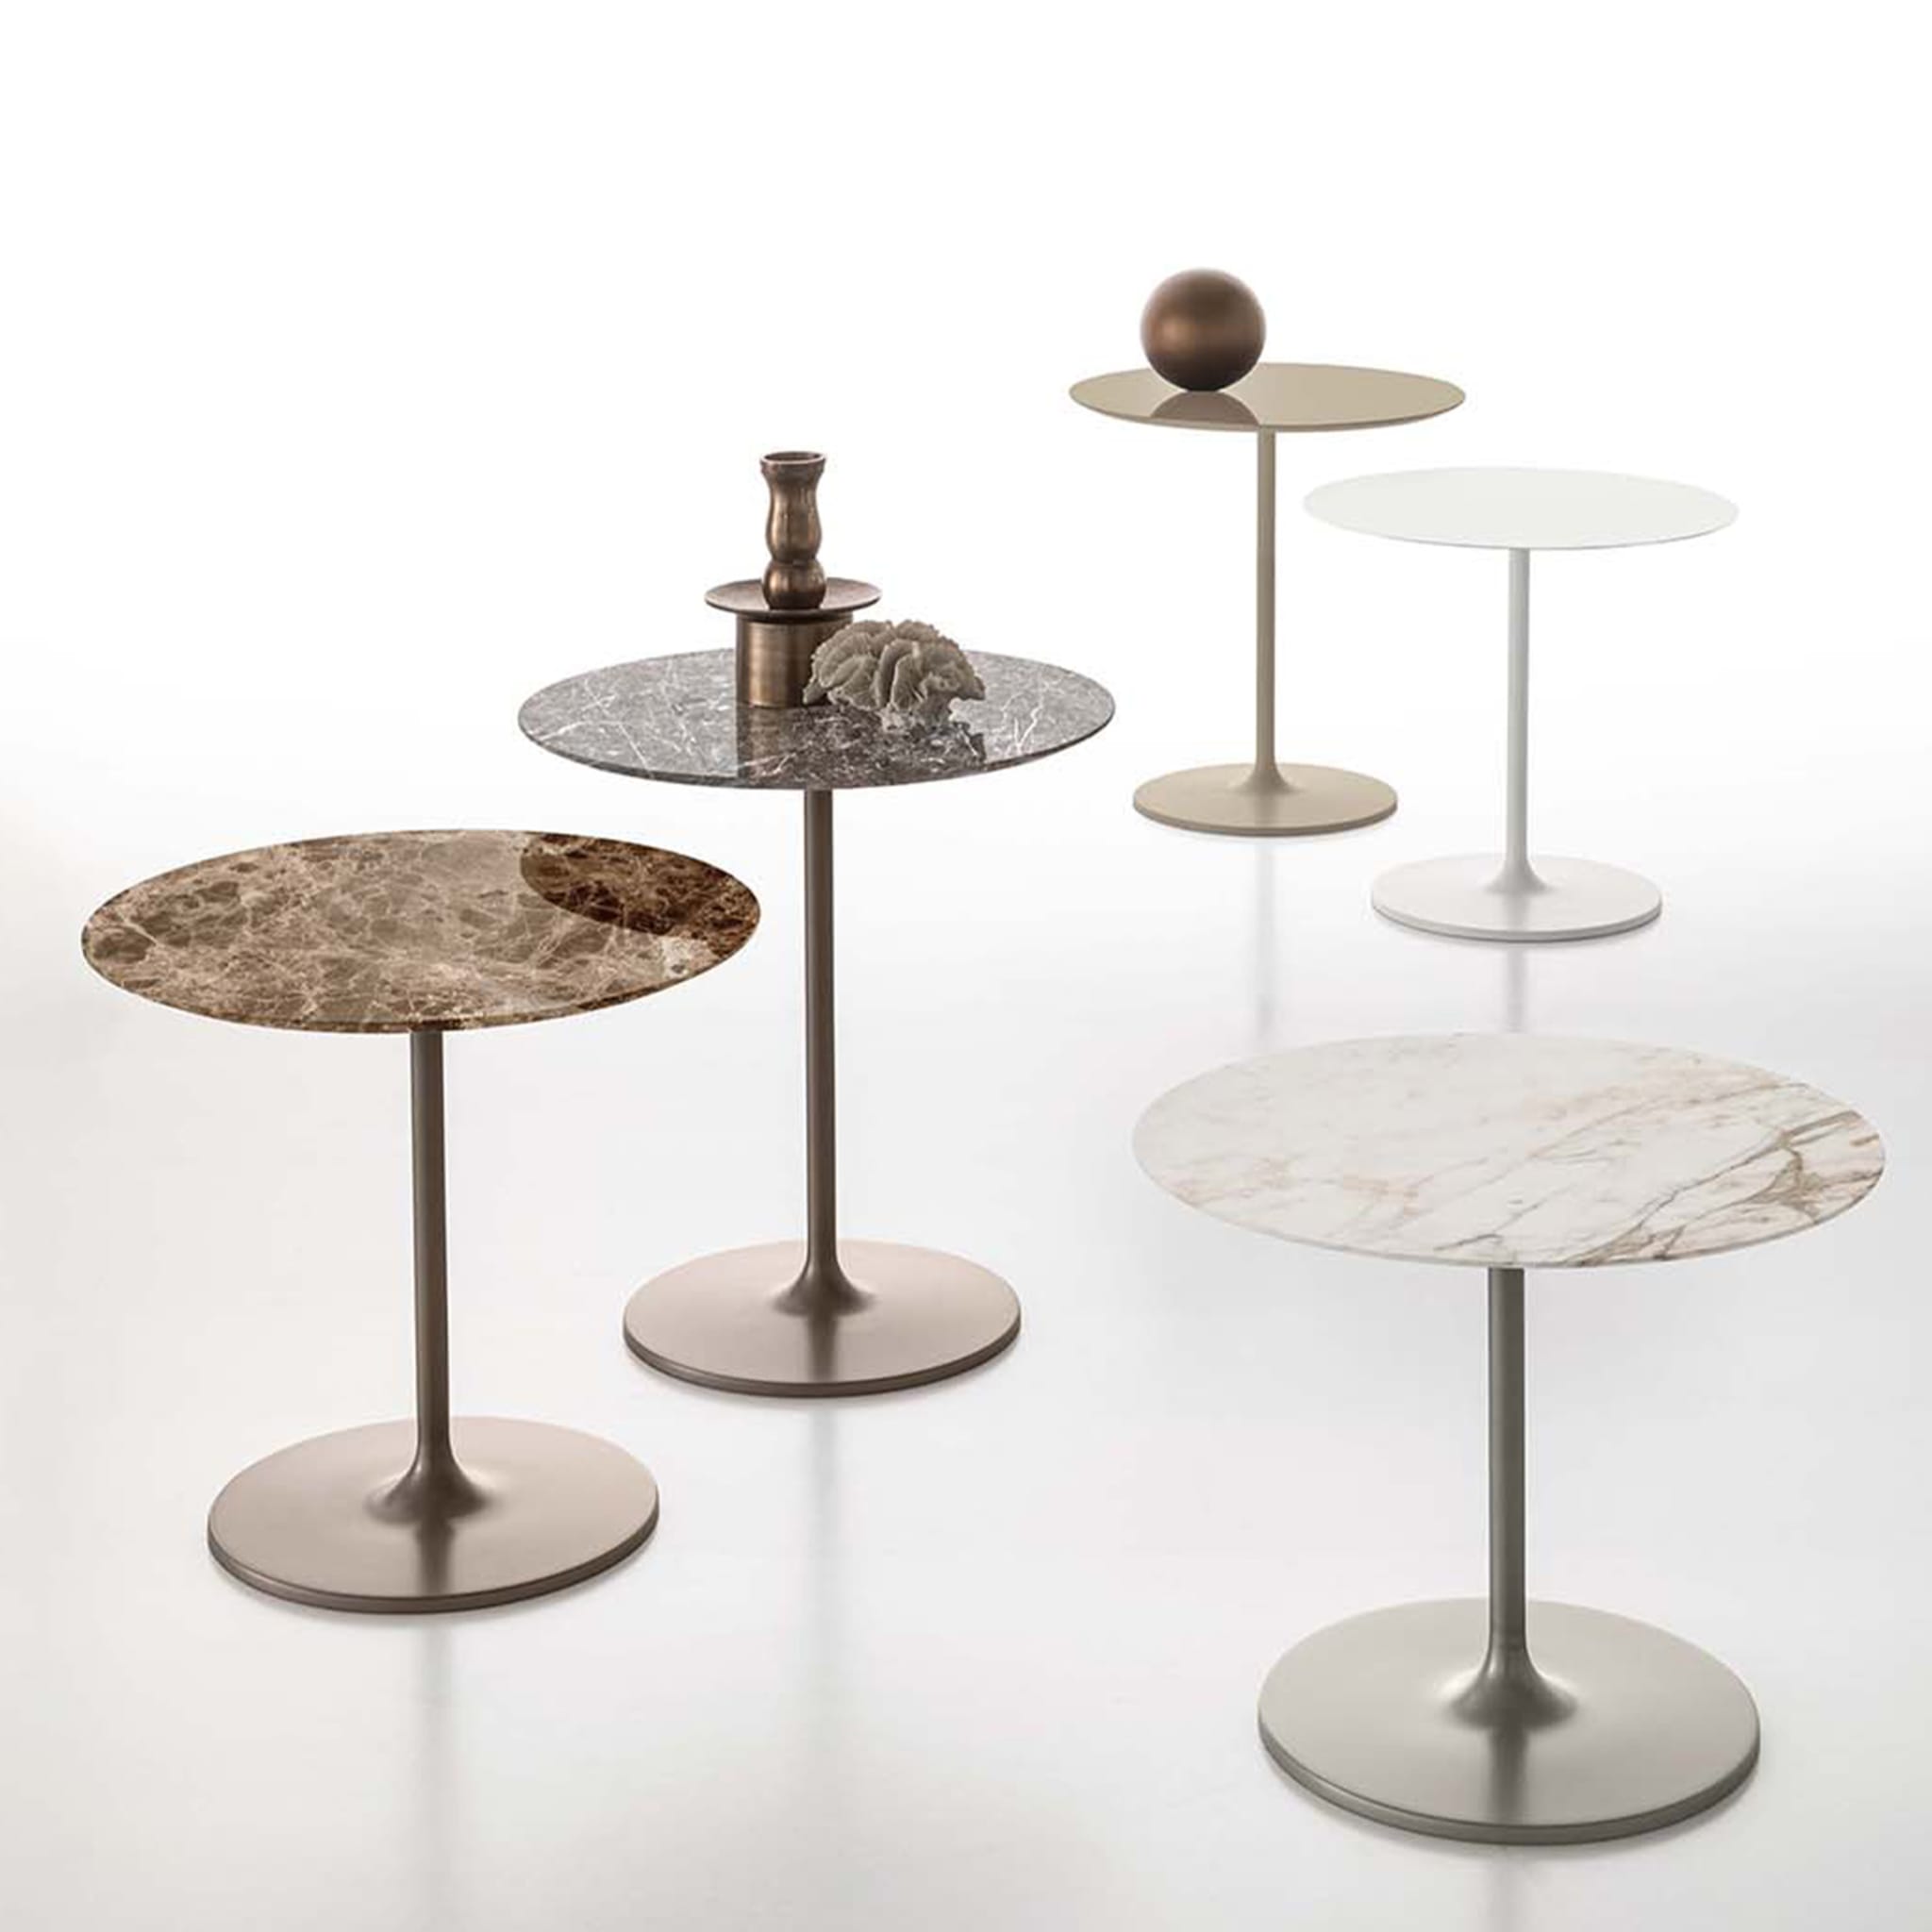 Table d'appoint ronde Glow en marbre Calacatta par Giuseppe Bavuso - Vue alternative 1